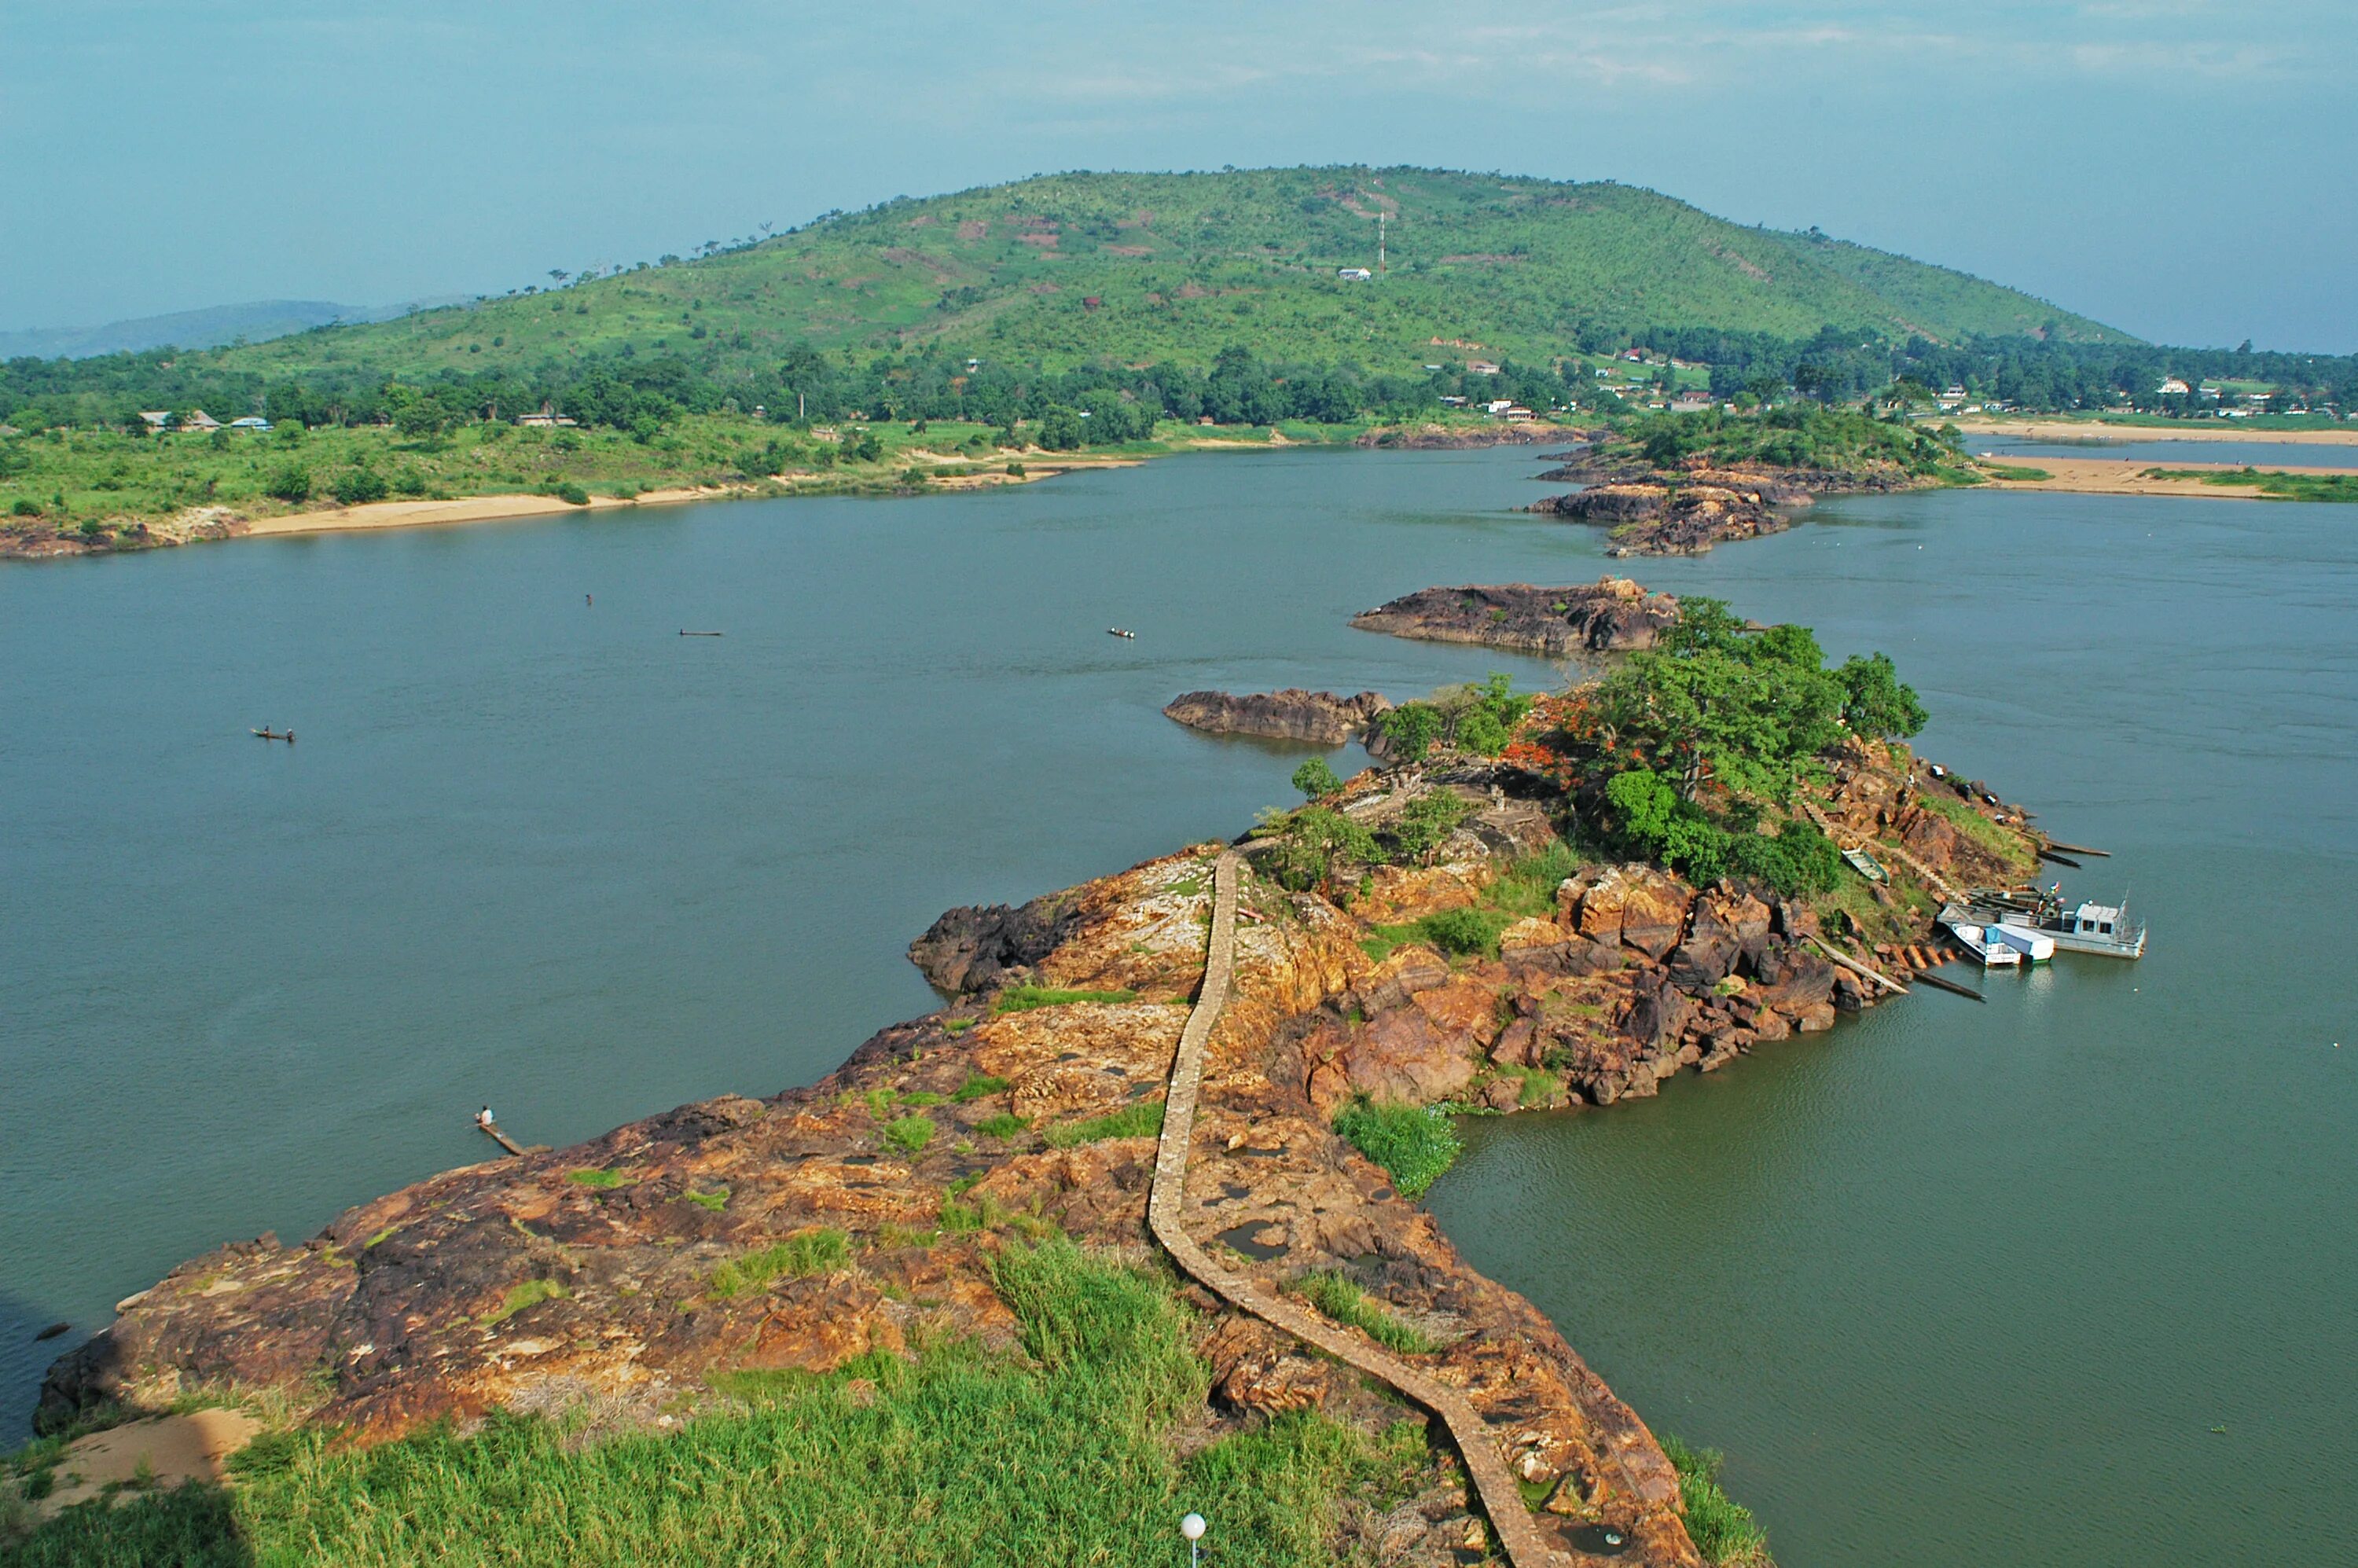 Africa river. Река Убанги Африка. Африка Конго Убанги. Река Уэле. Центральная Африка река Конго.